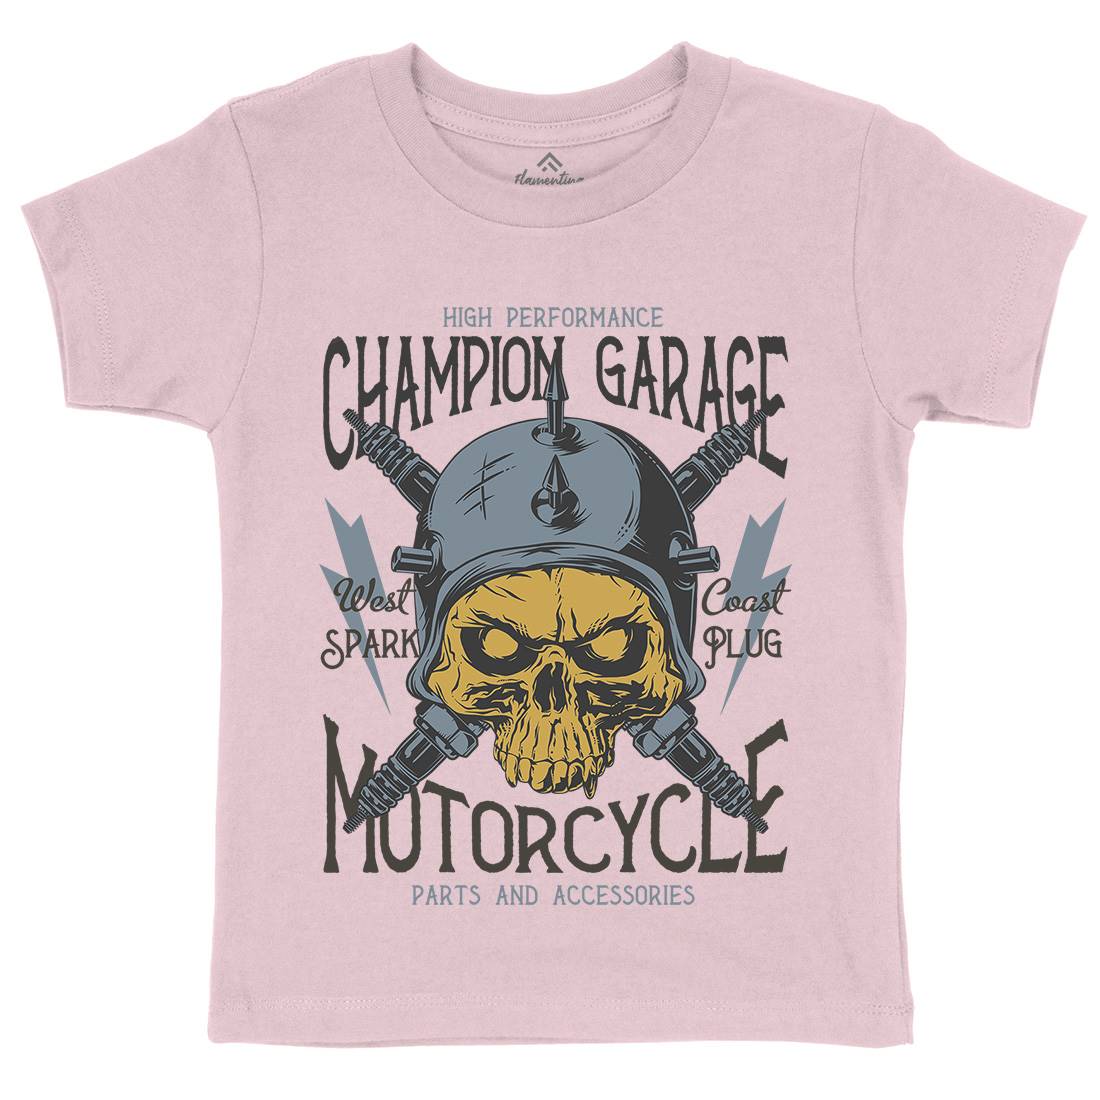 Champion Garage Kids Crew Neck T-Shirt Motorcycles D917